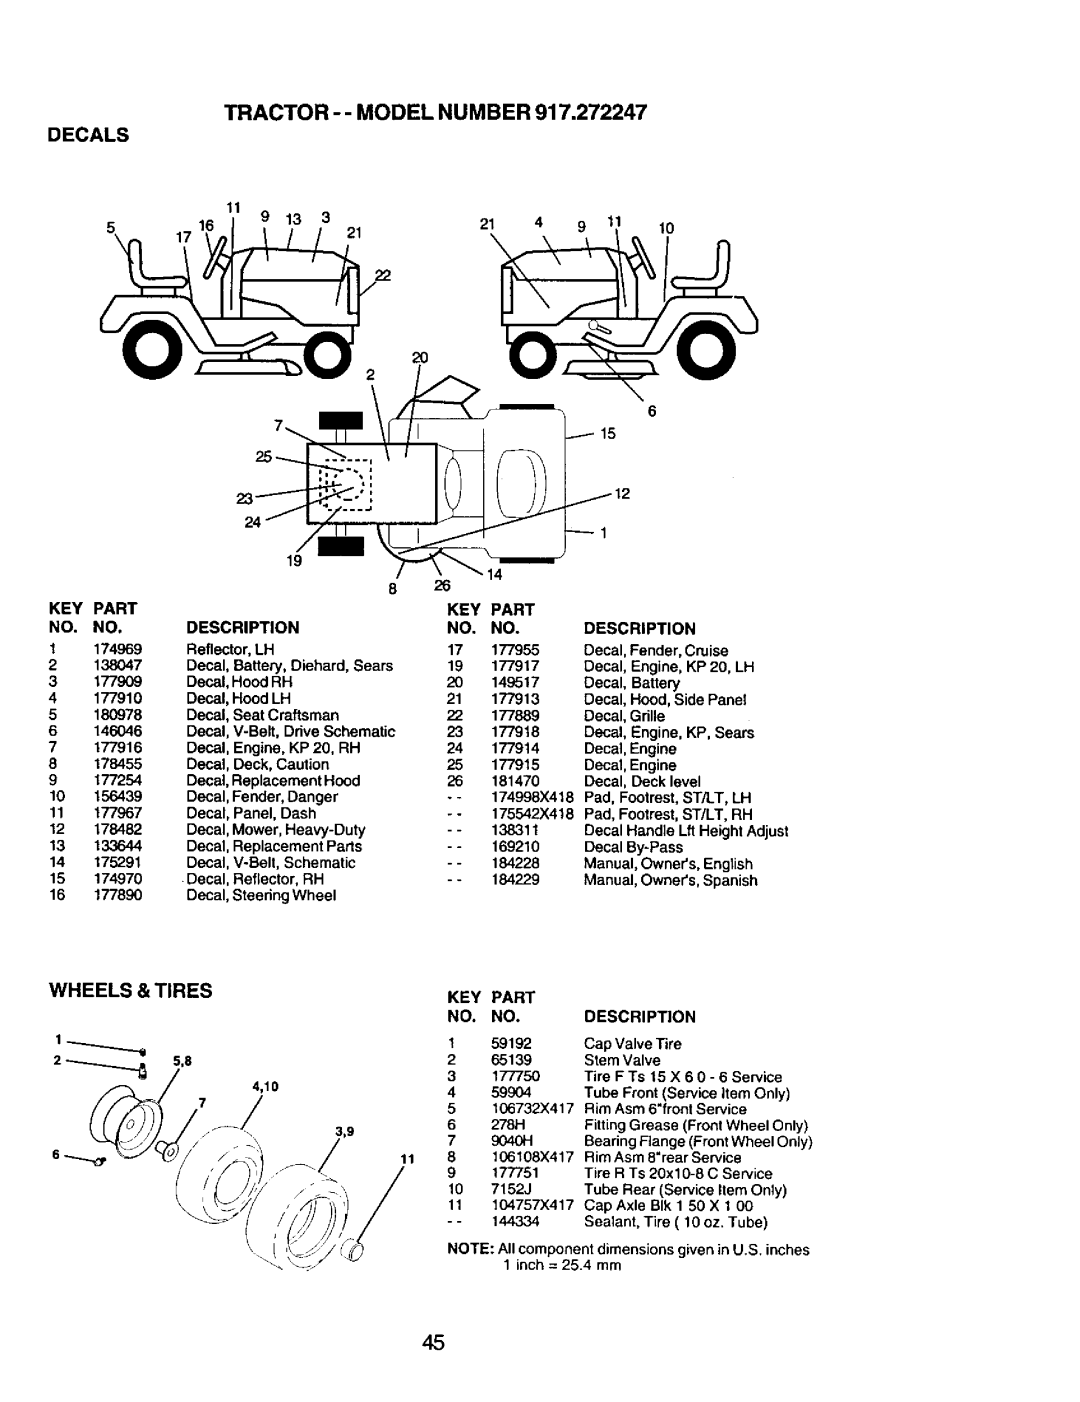 Craftsman 917.272247 owner manual Tractor -- Model Number, Decals, Part, Description 